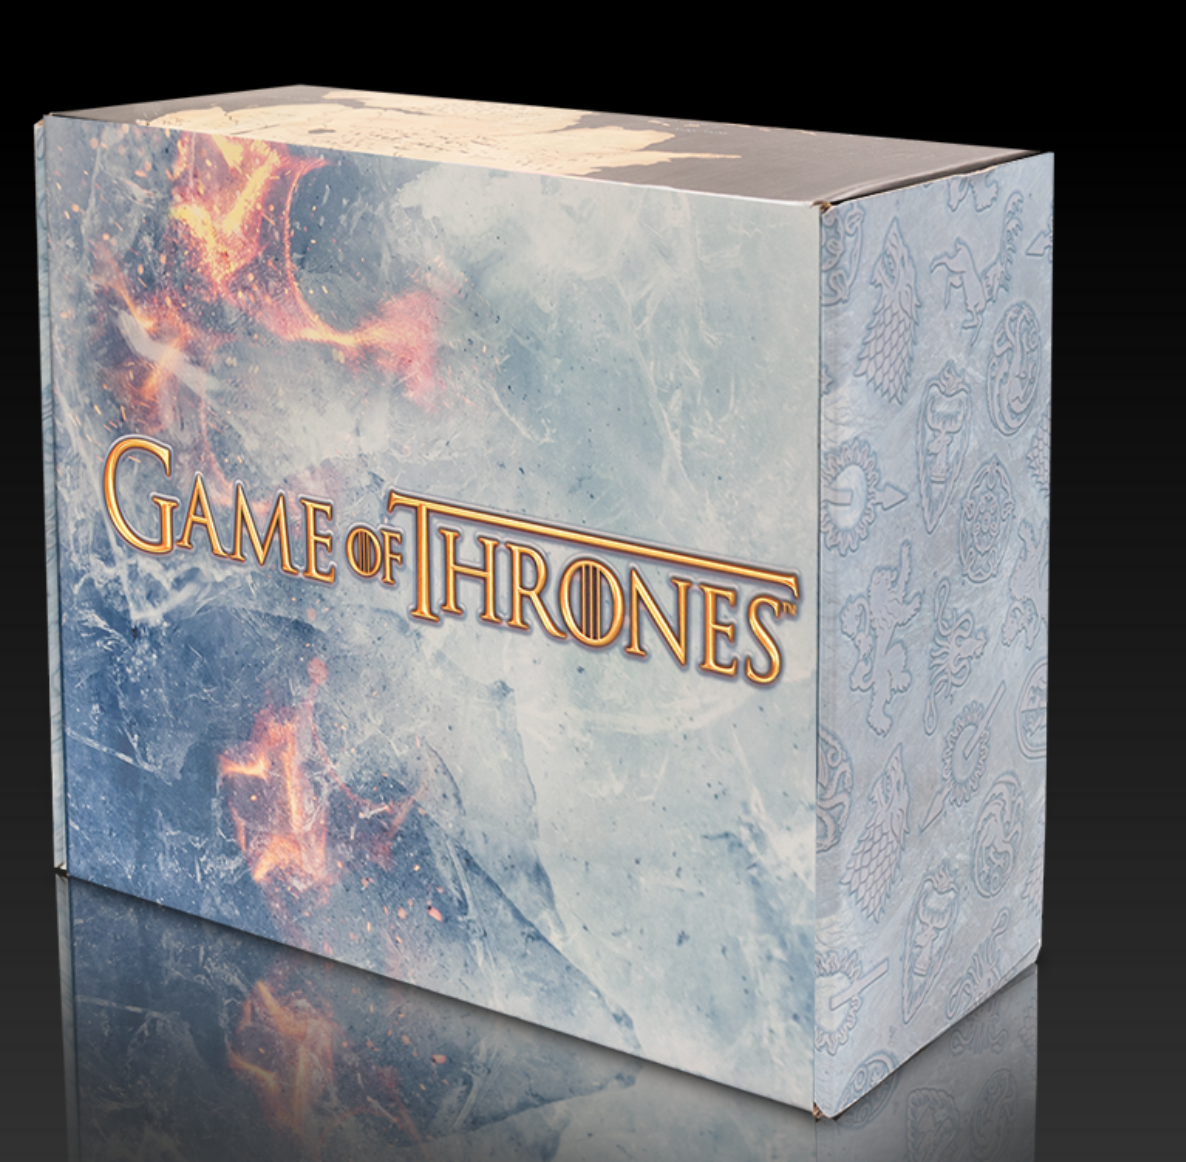 Game of Thrones Box Spring 2018 Theme Spoiler!